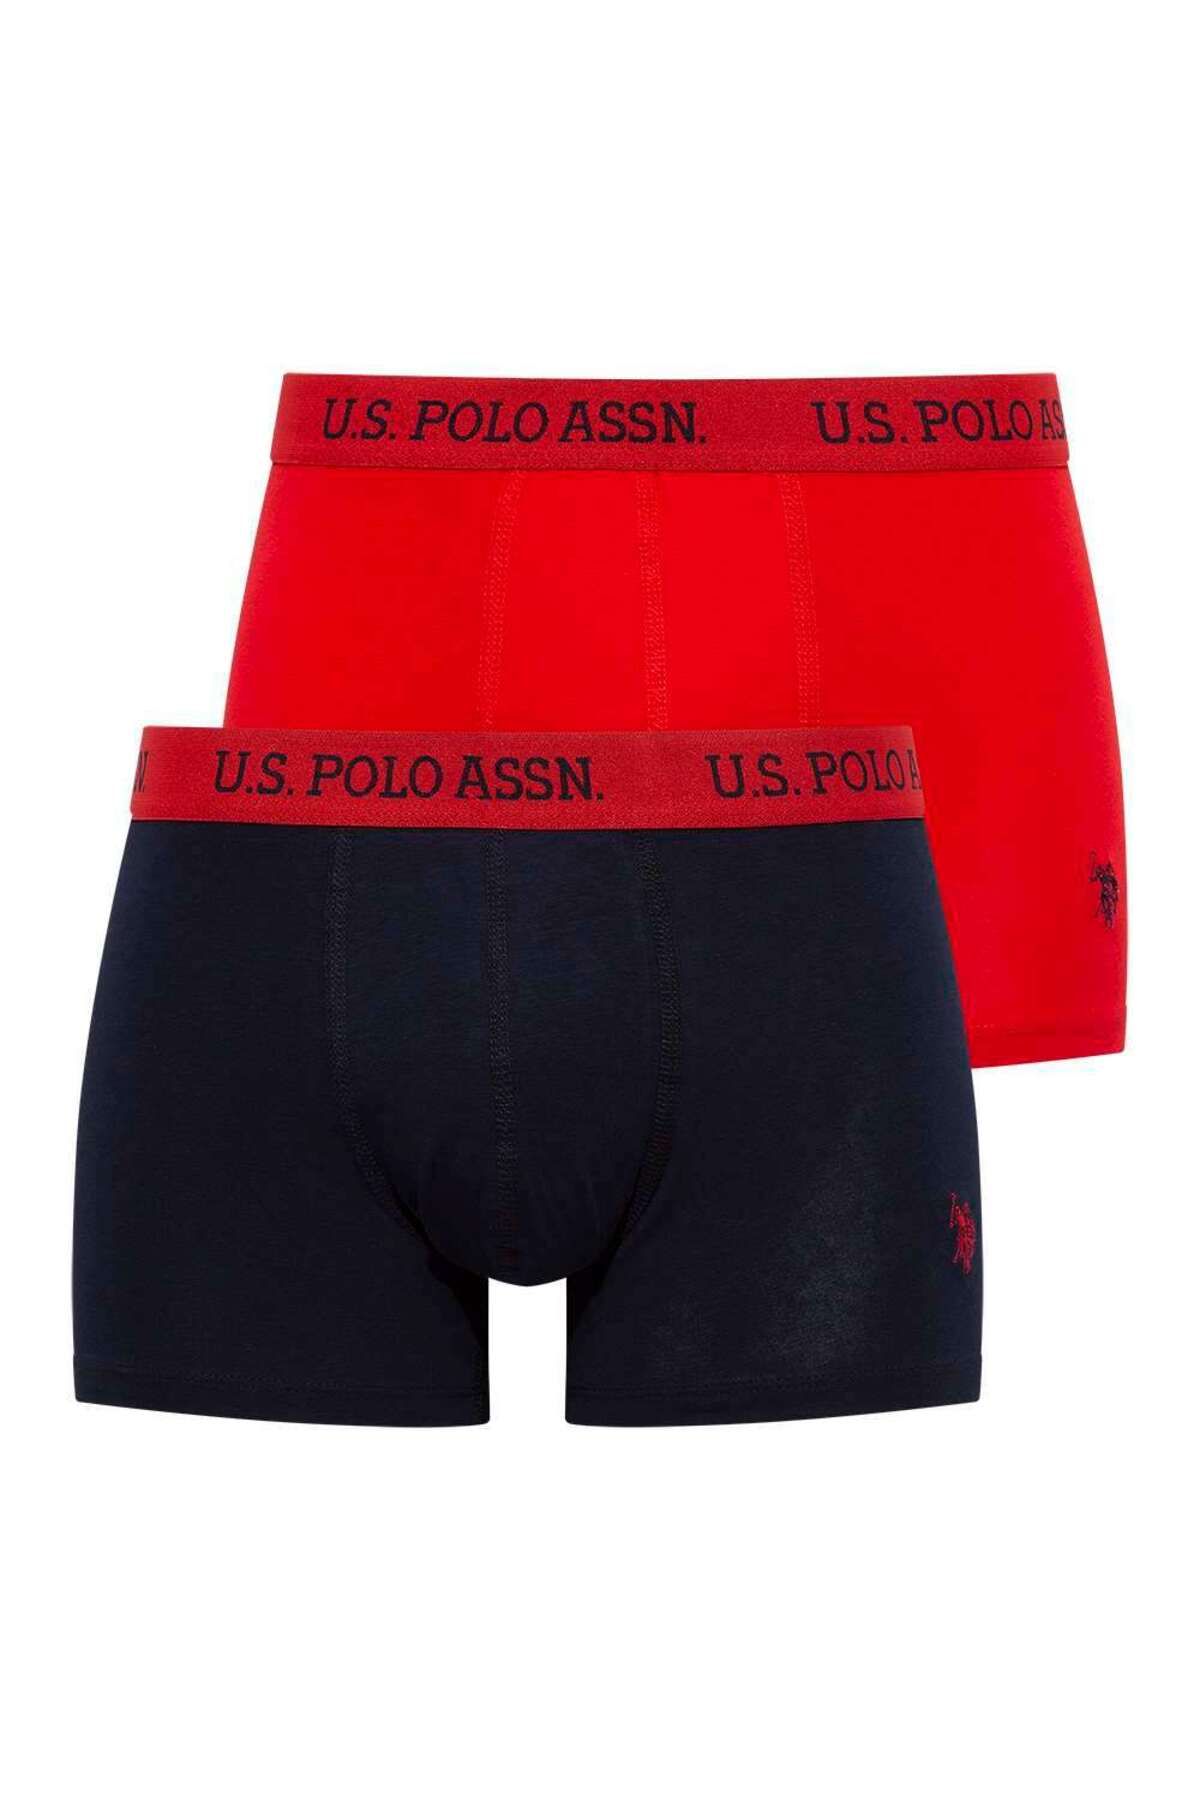 U.S. Polo Assn. Erkek Kırmızı - Lacivert 2 Li Boxer 80374